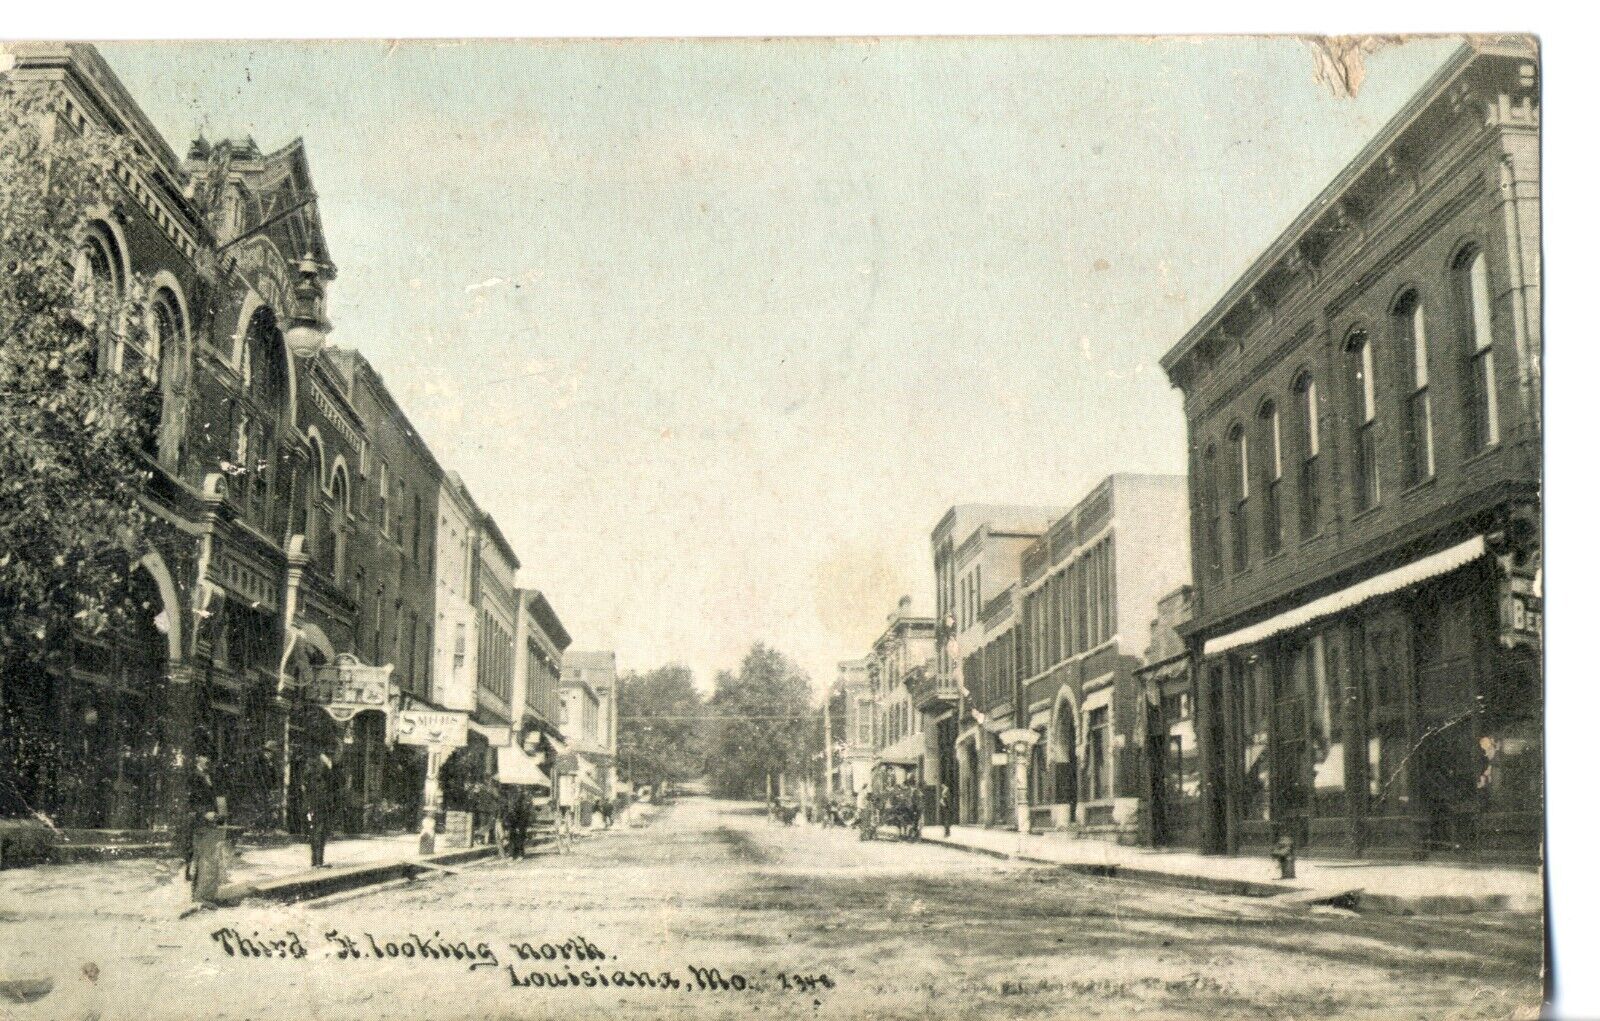 Third St. Looking North, Louisiana, Mo. Missouri Postcard #2348. C. U. Williams